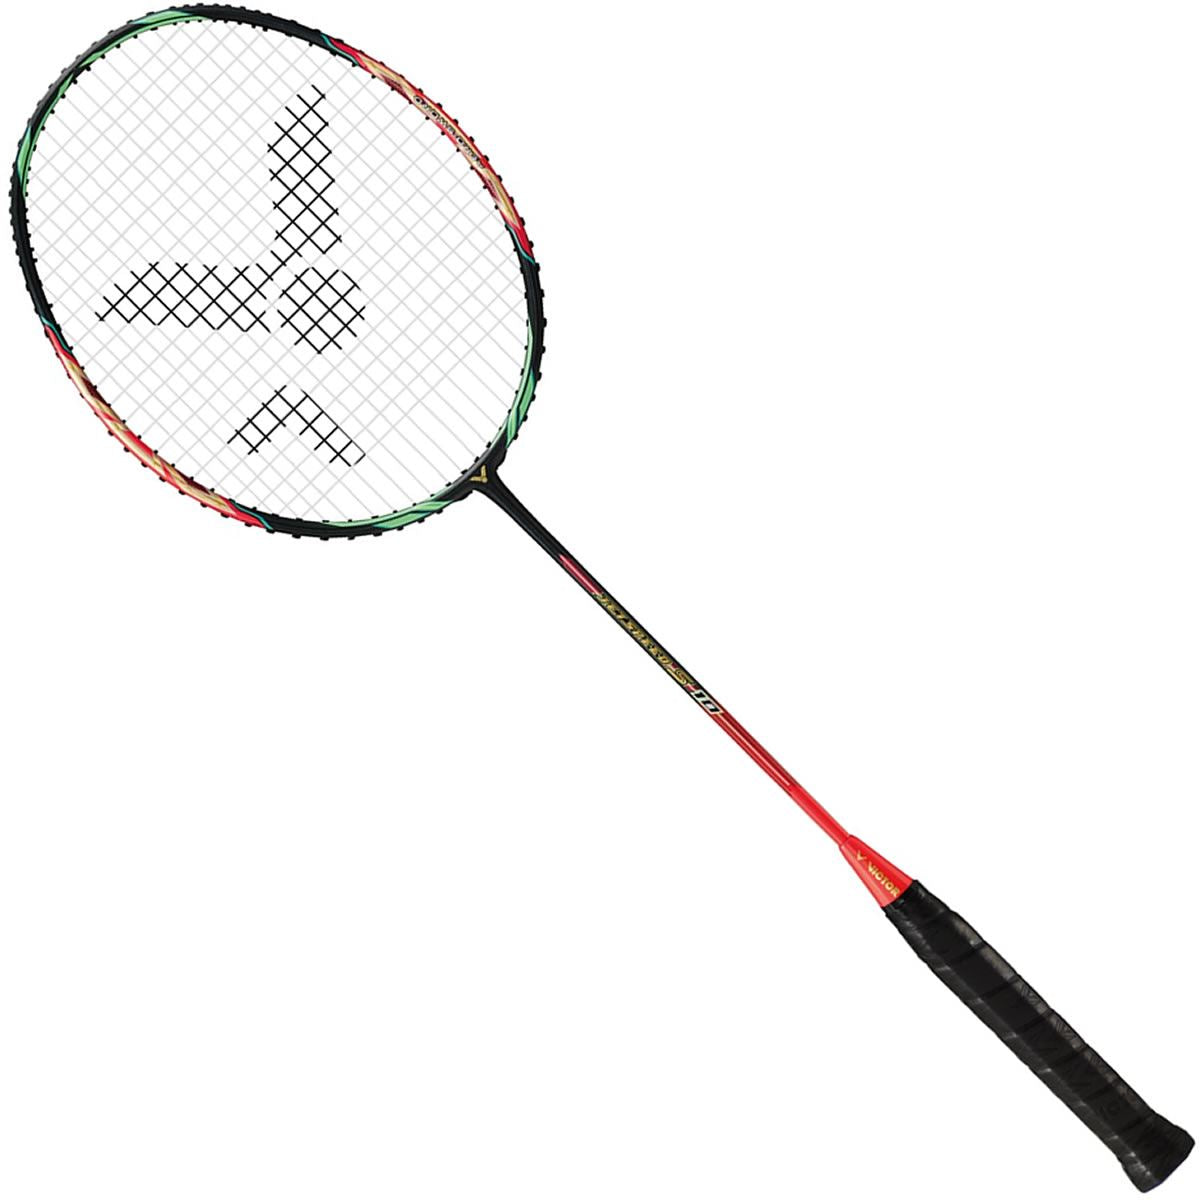 Victor Jetspeed S 10 Q Badminton Racket - Red Black